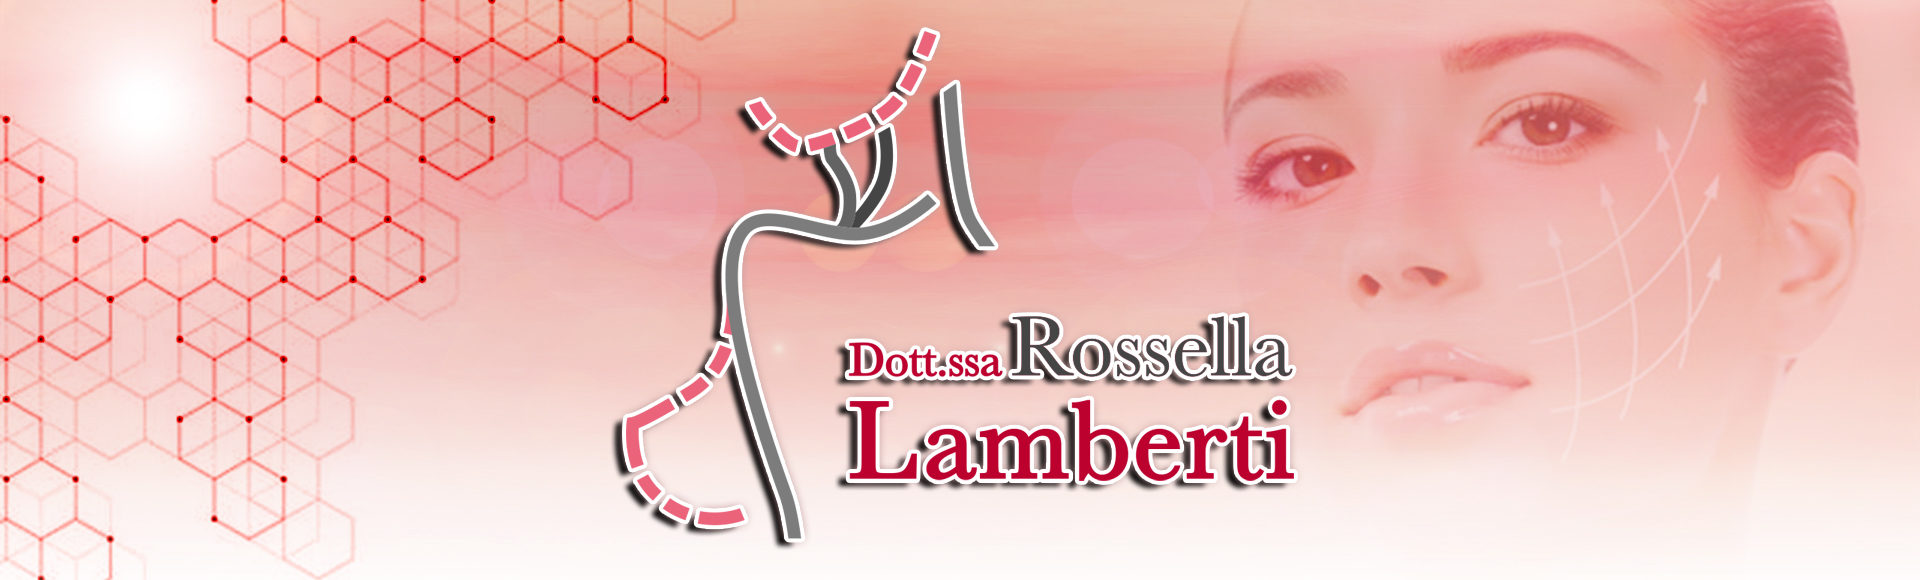 Dottoressa Rossella Lamberti